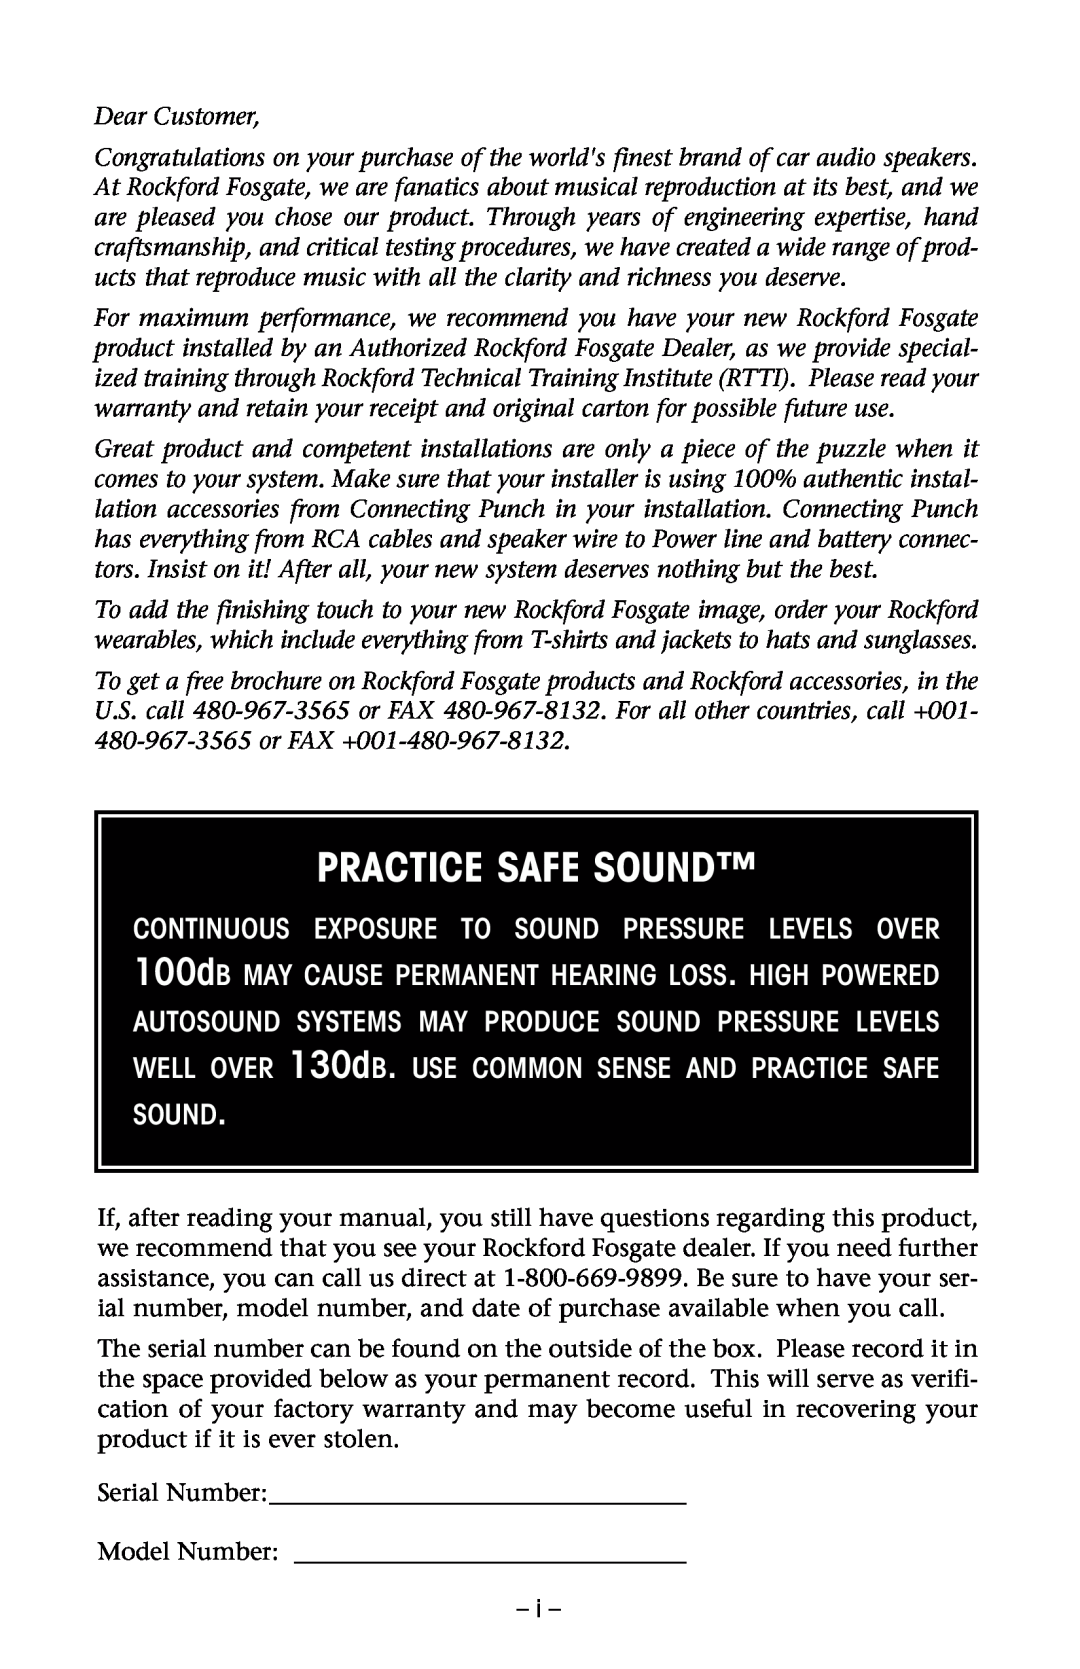 Rockford Fosgate RFP3208, RFD2218 manual Practice Safe Sound 